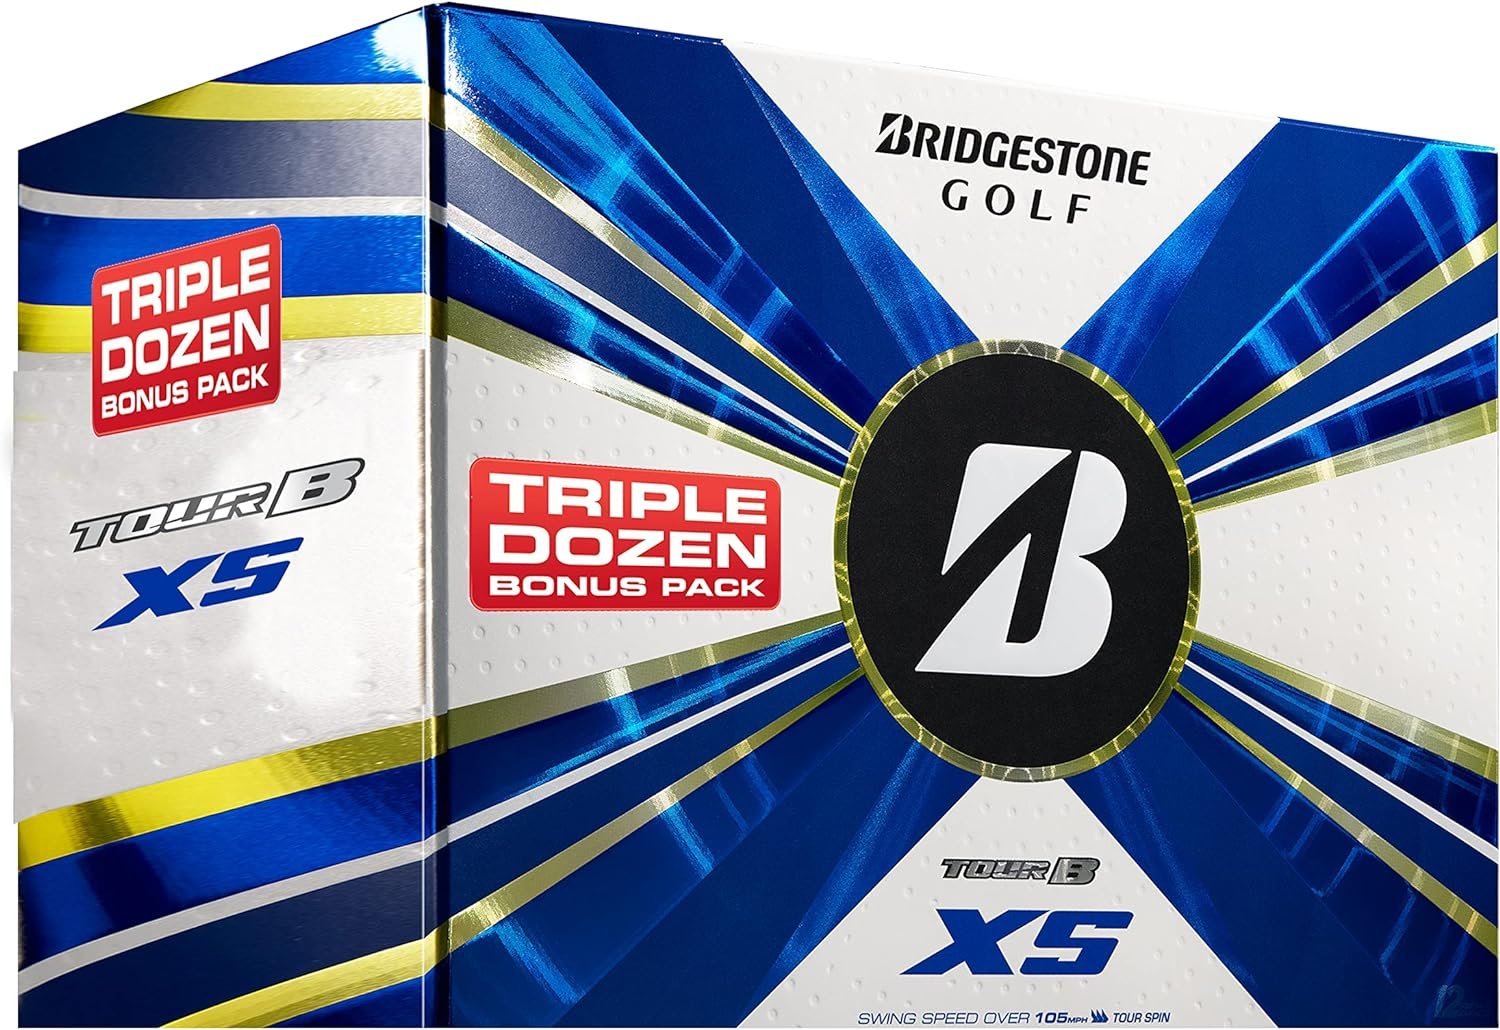 Bridgestone Golf 2022 Tour B XS Trifecta 3 Dozen Pack Golf Balls